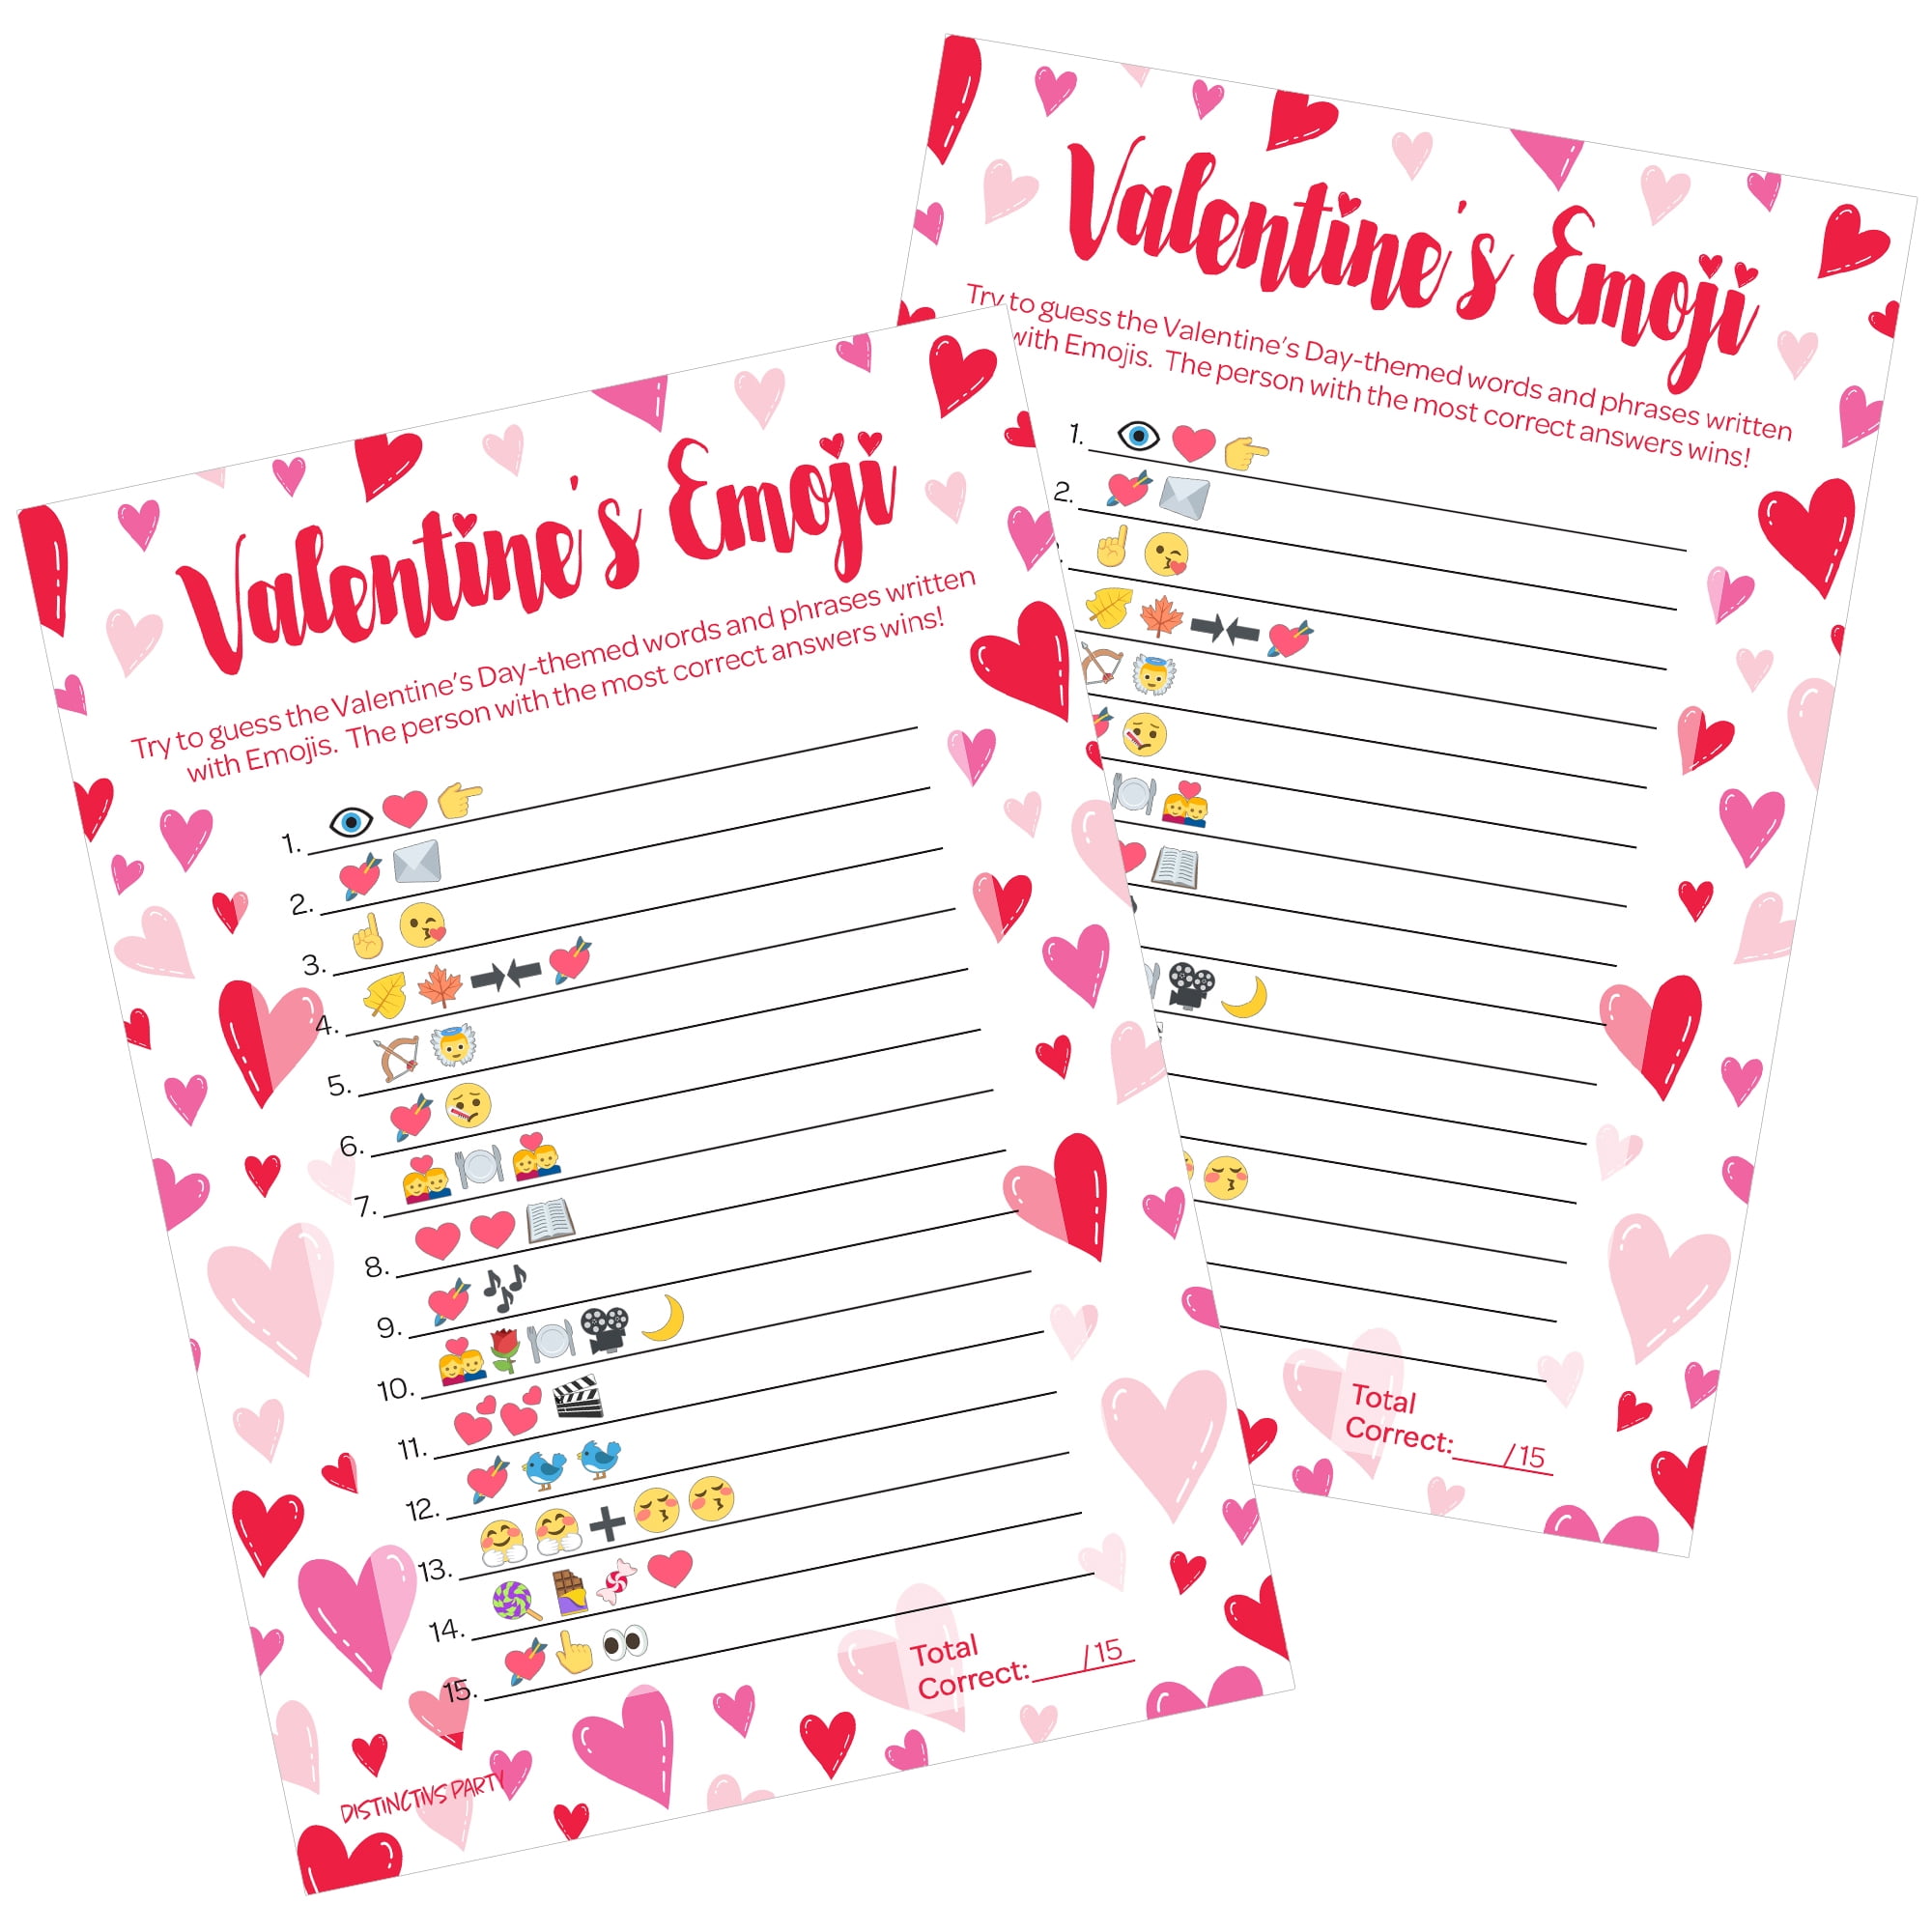 Busy Kids Valentine Hard Candy Filled Jewelry Kit Heart 3.88 oz